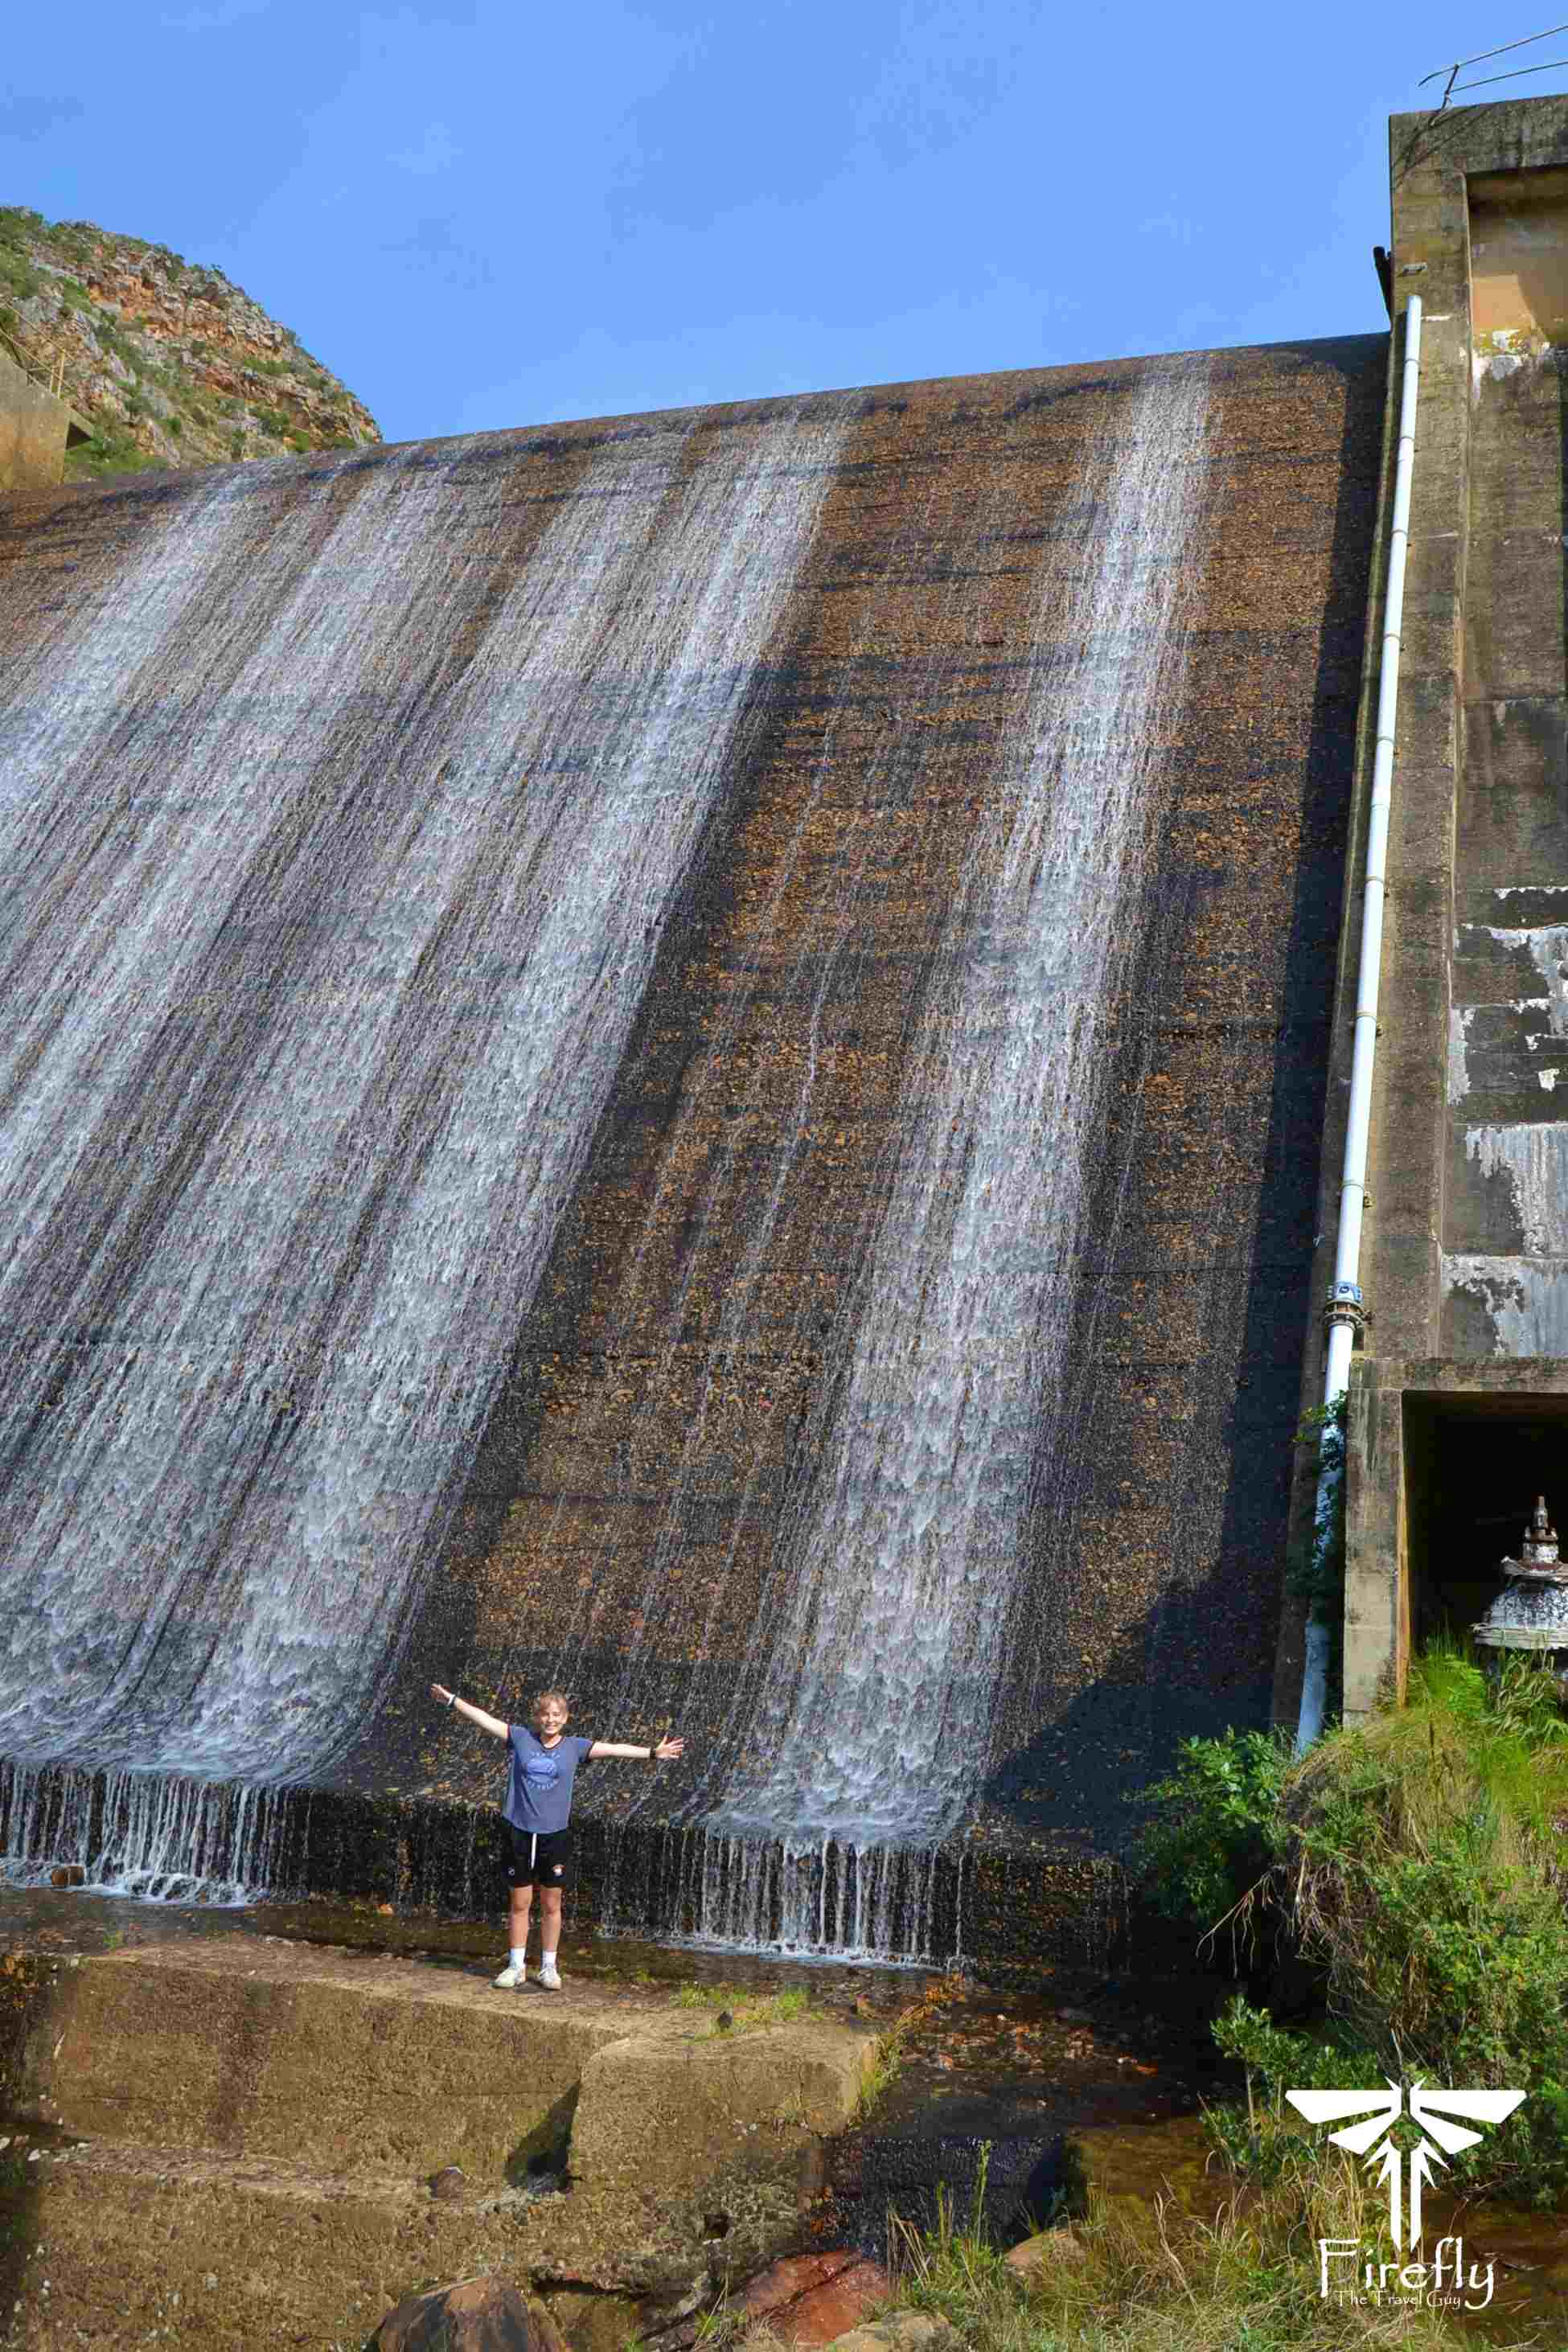 Lower Van Stadens Dam